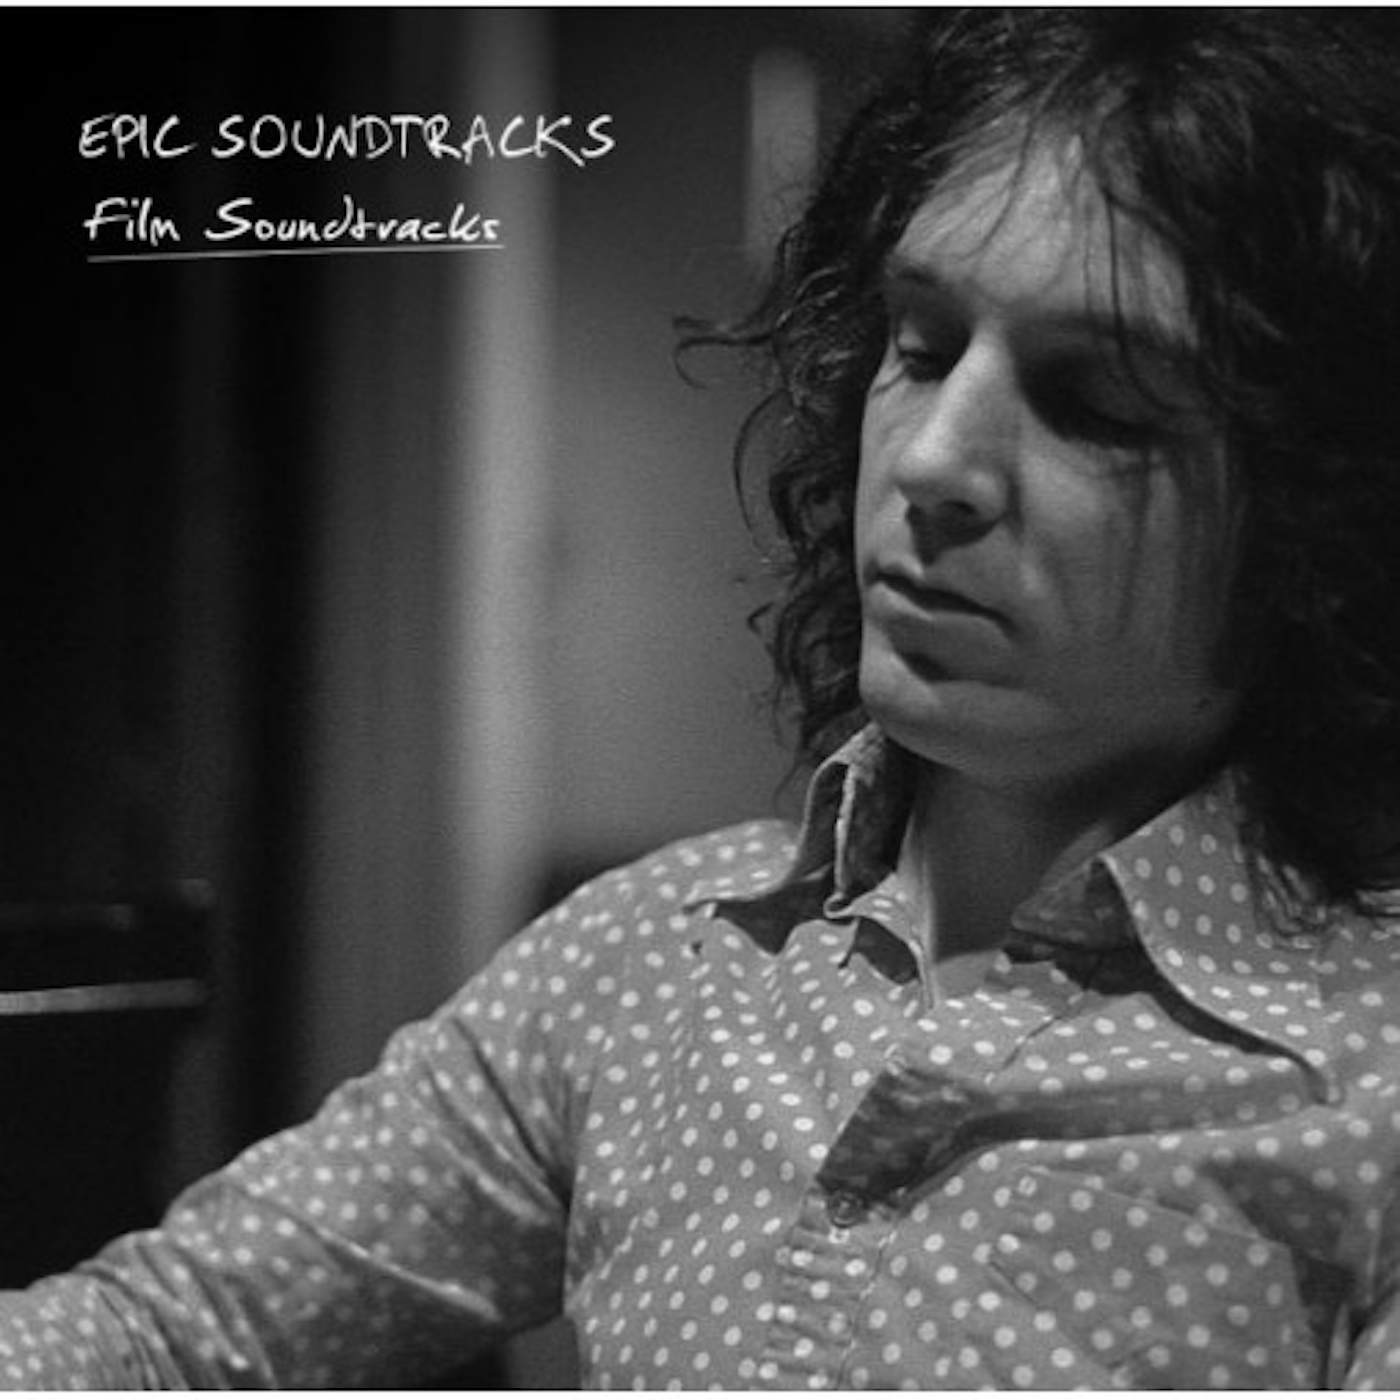 Epic Soundtracks Film Soundtracks Vinyl Record